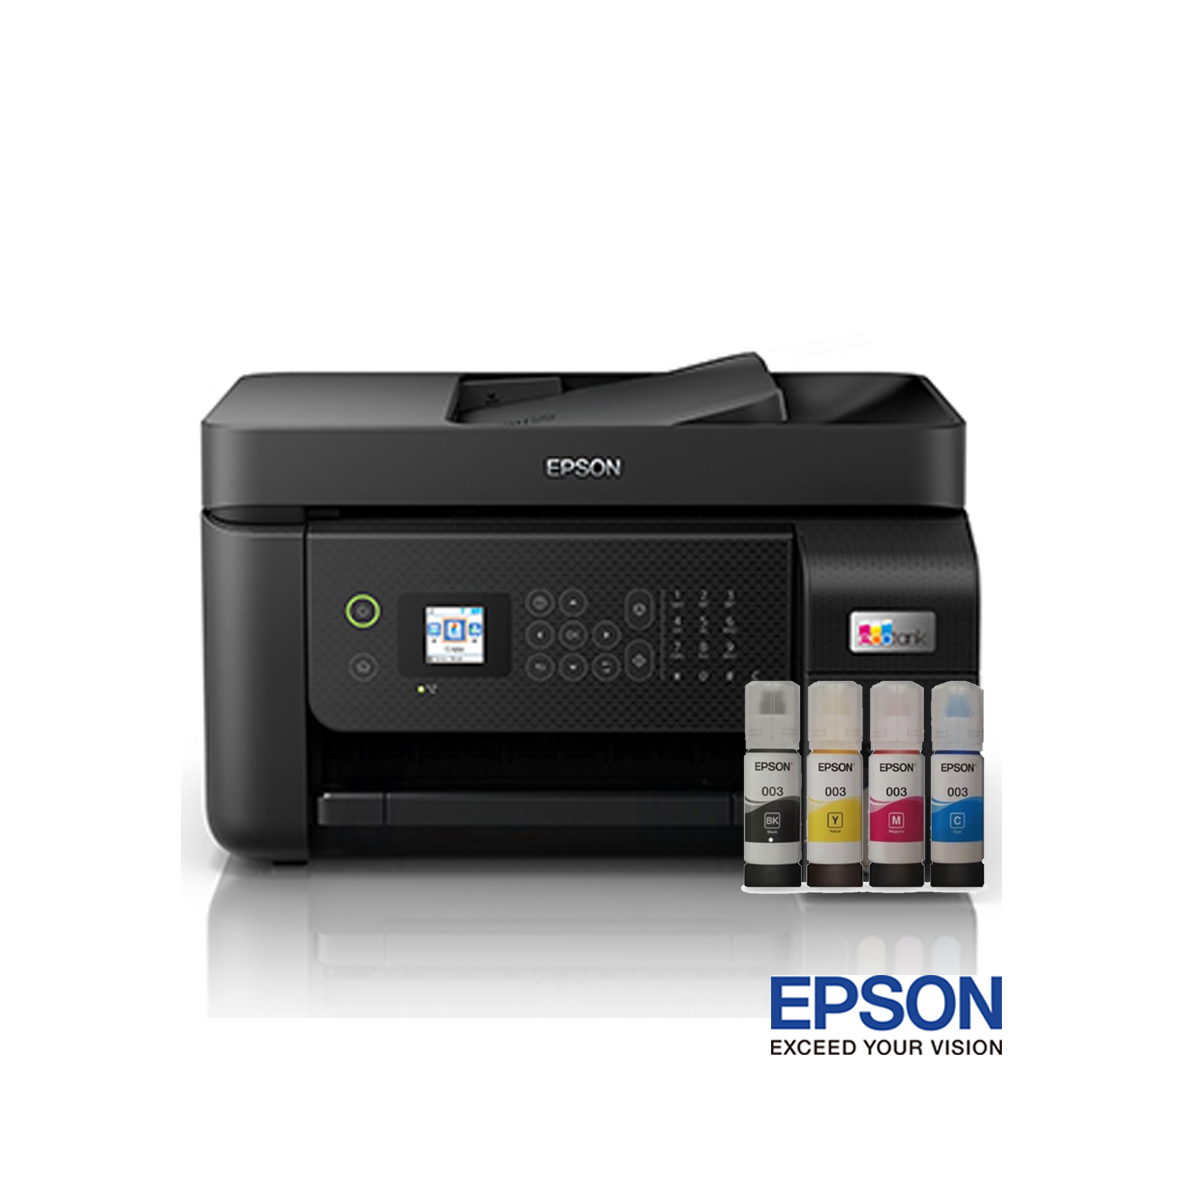 Jual Printer Epson L5290 Print Scan Copy Fax Ink Tank WiFi di Denpasar Bali